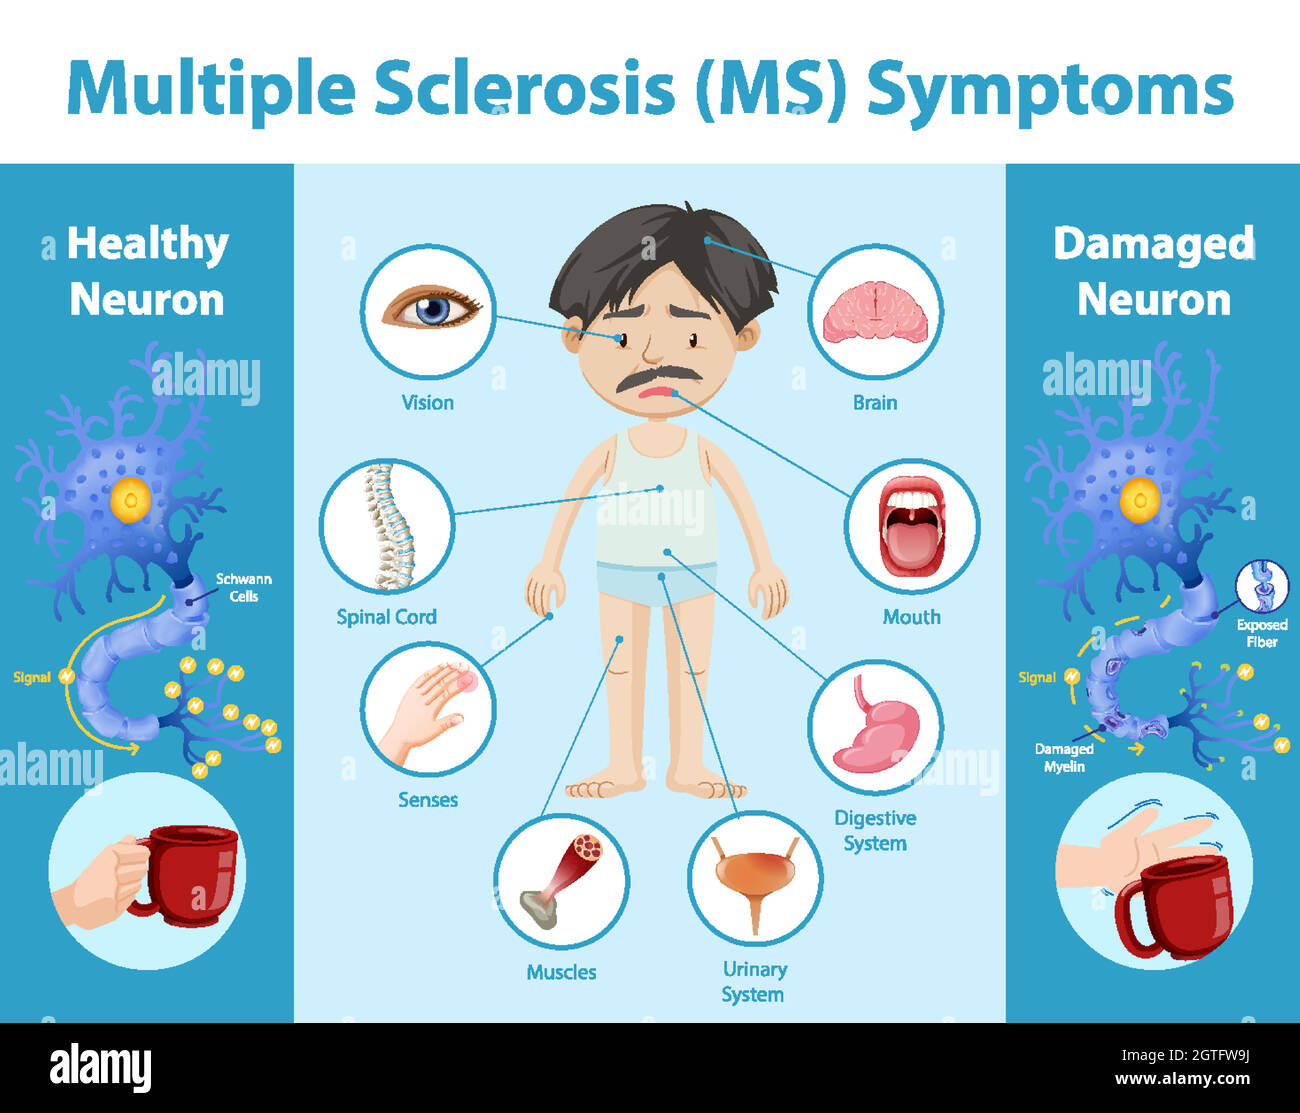 Symptoms multiple sclerosis Multiple sclerosis